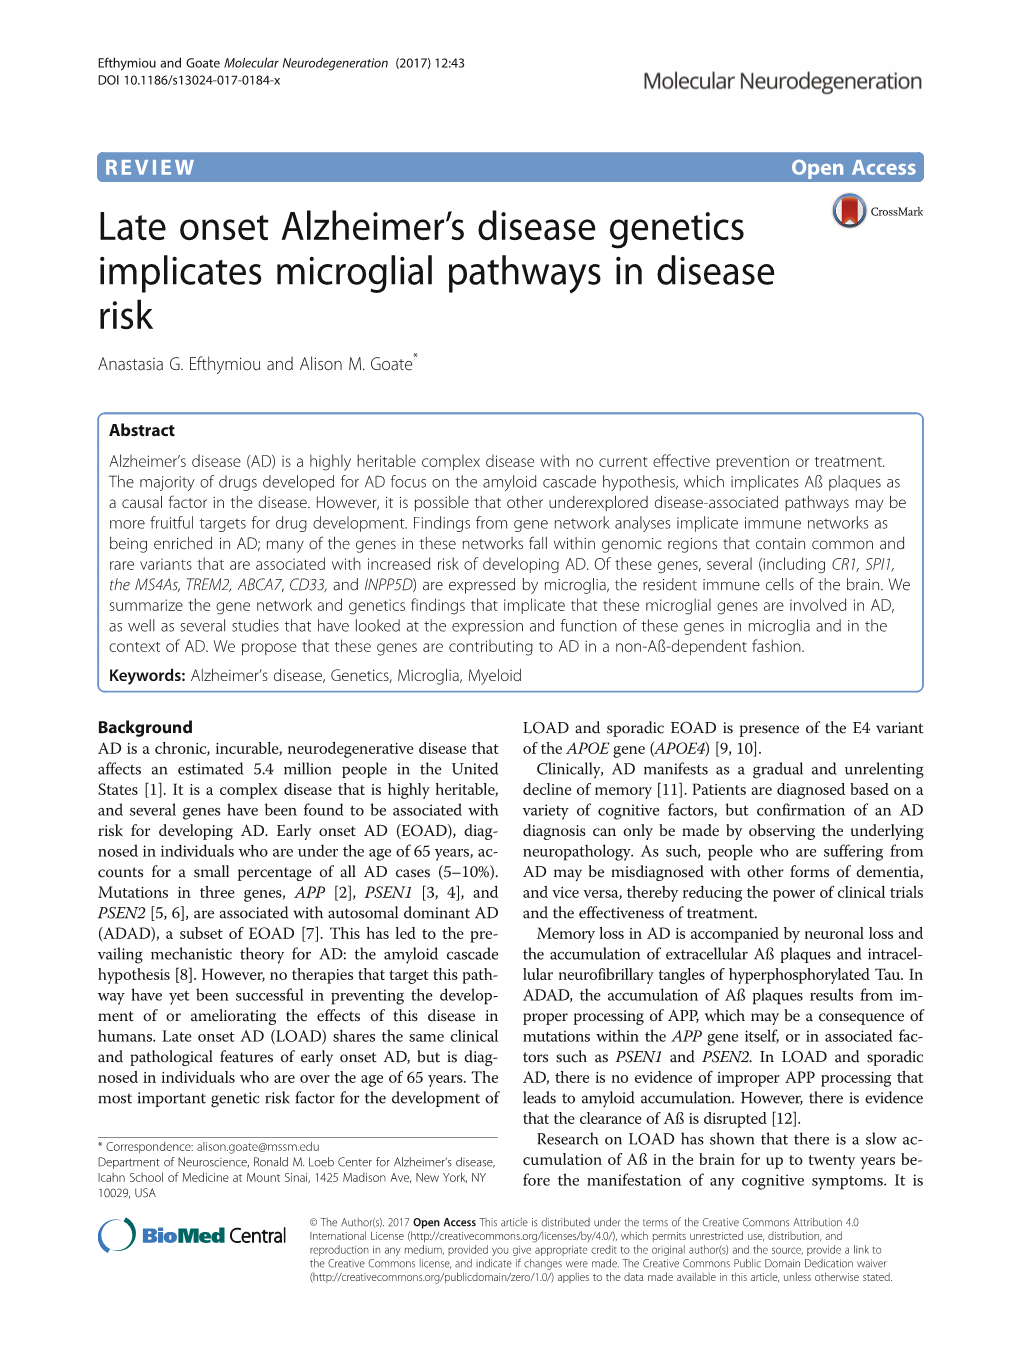 Late Onset Alzheimer's Disease Genetics Implicates Microglial